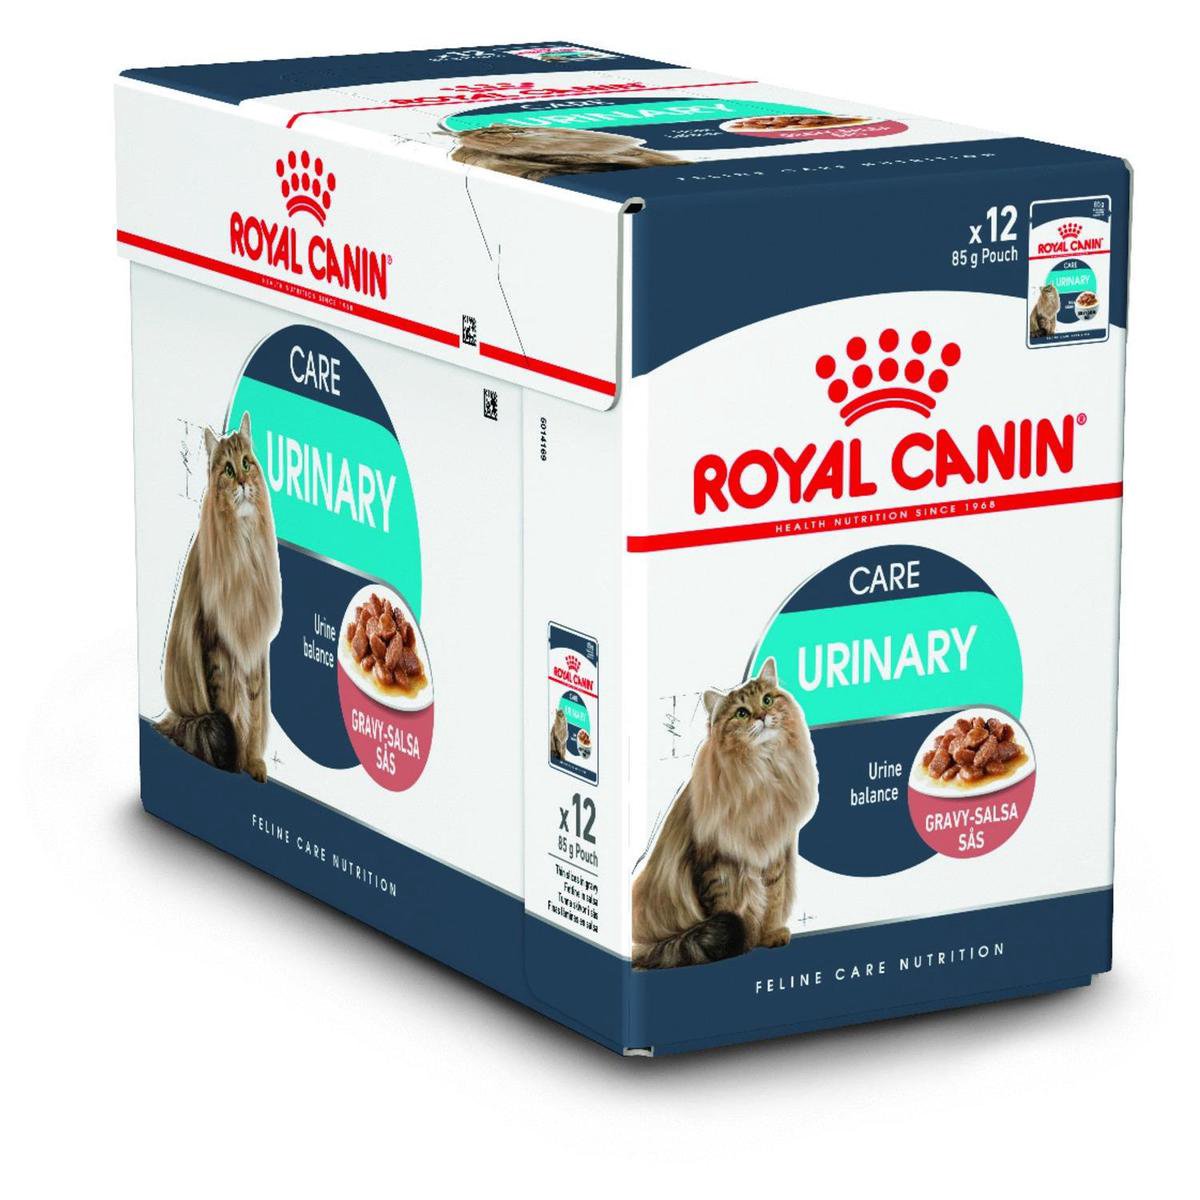 Royal canin urinary in gravy (12X85 |